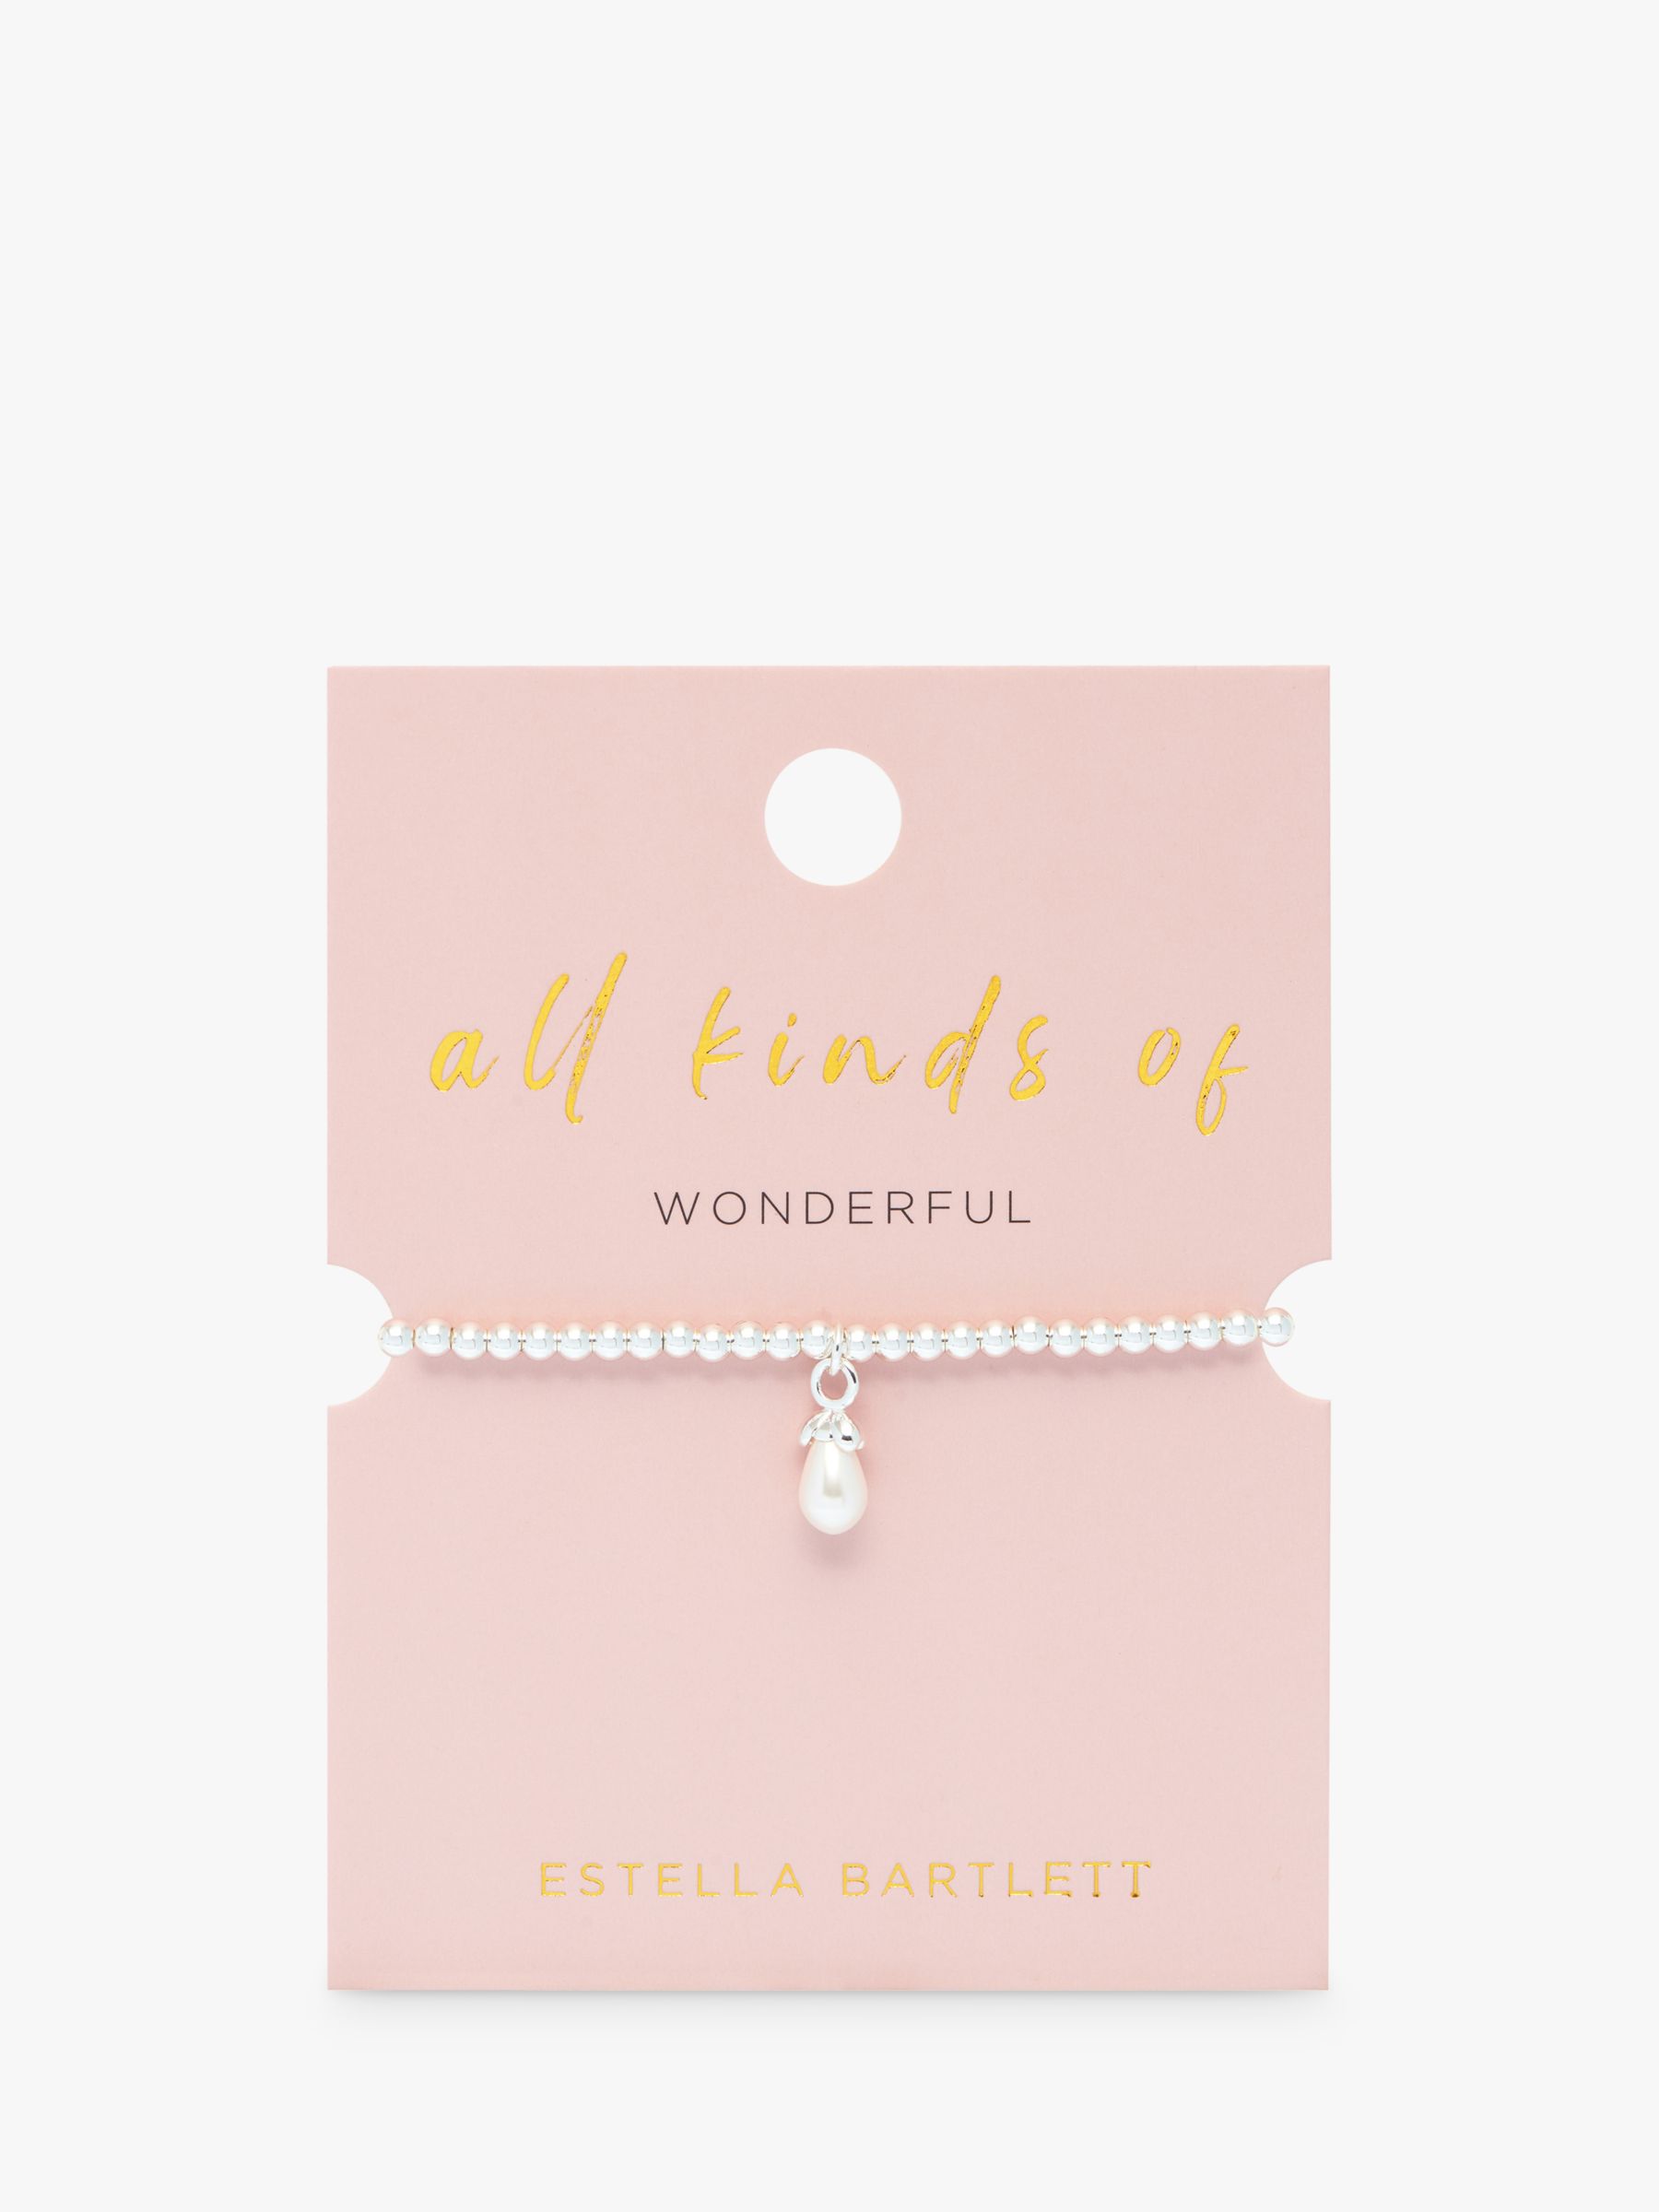 Buy Estella Bartlett Wonderful Mum Pearl Charm Beaded Bracelet, Silver Online at johnlewis.com